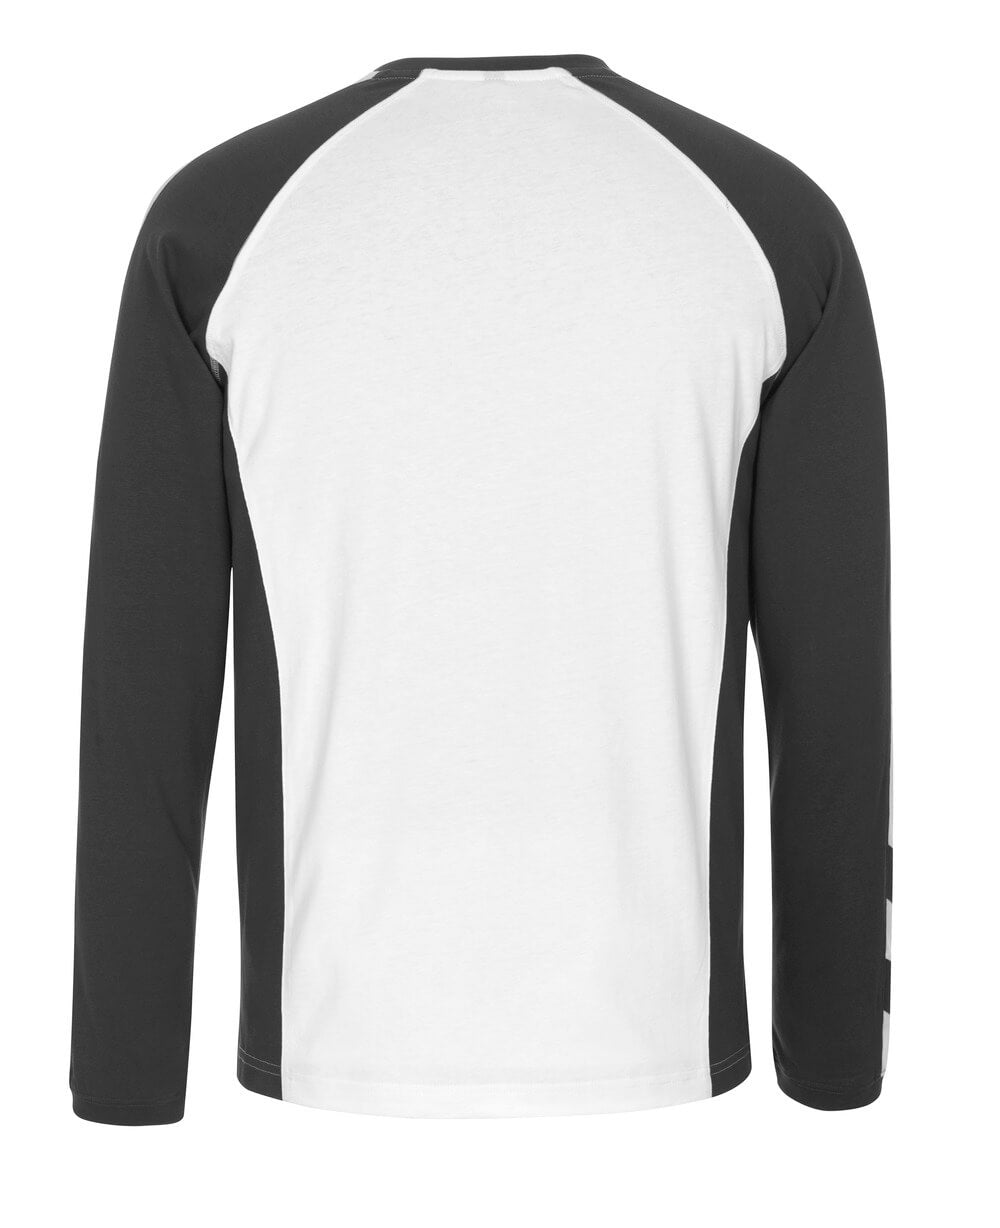 Mascot UNIQUE  Bielefeld T-shirt, long-sleeved 50568 white/dark anthracite